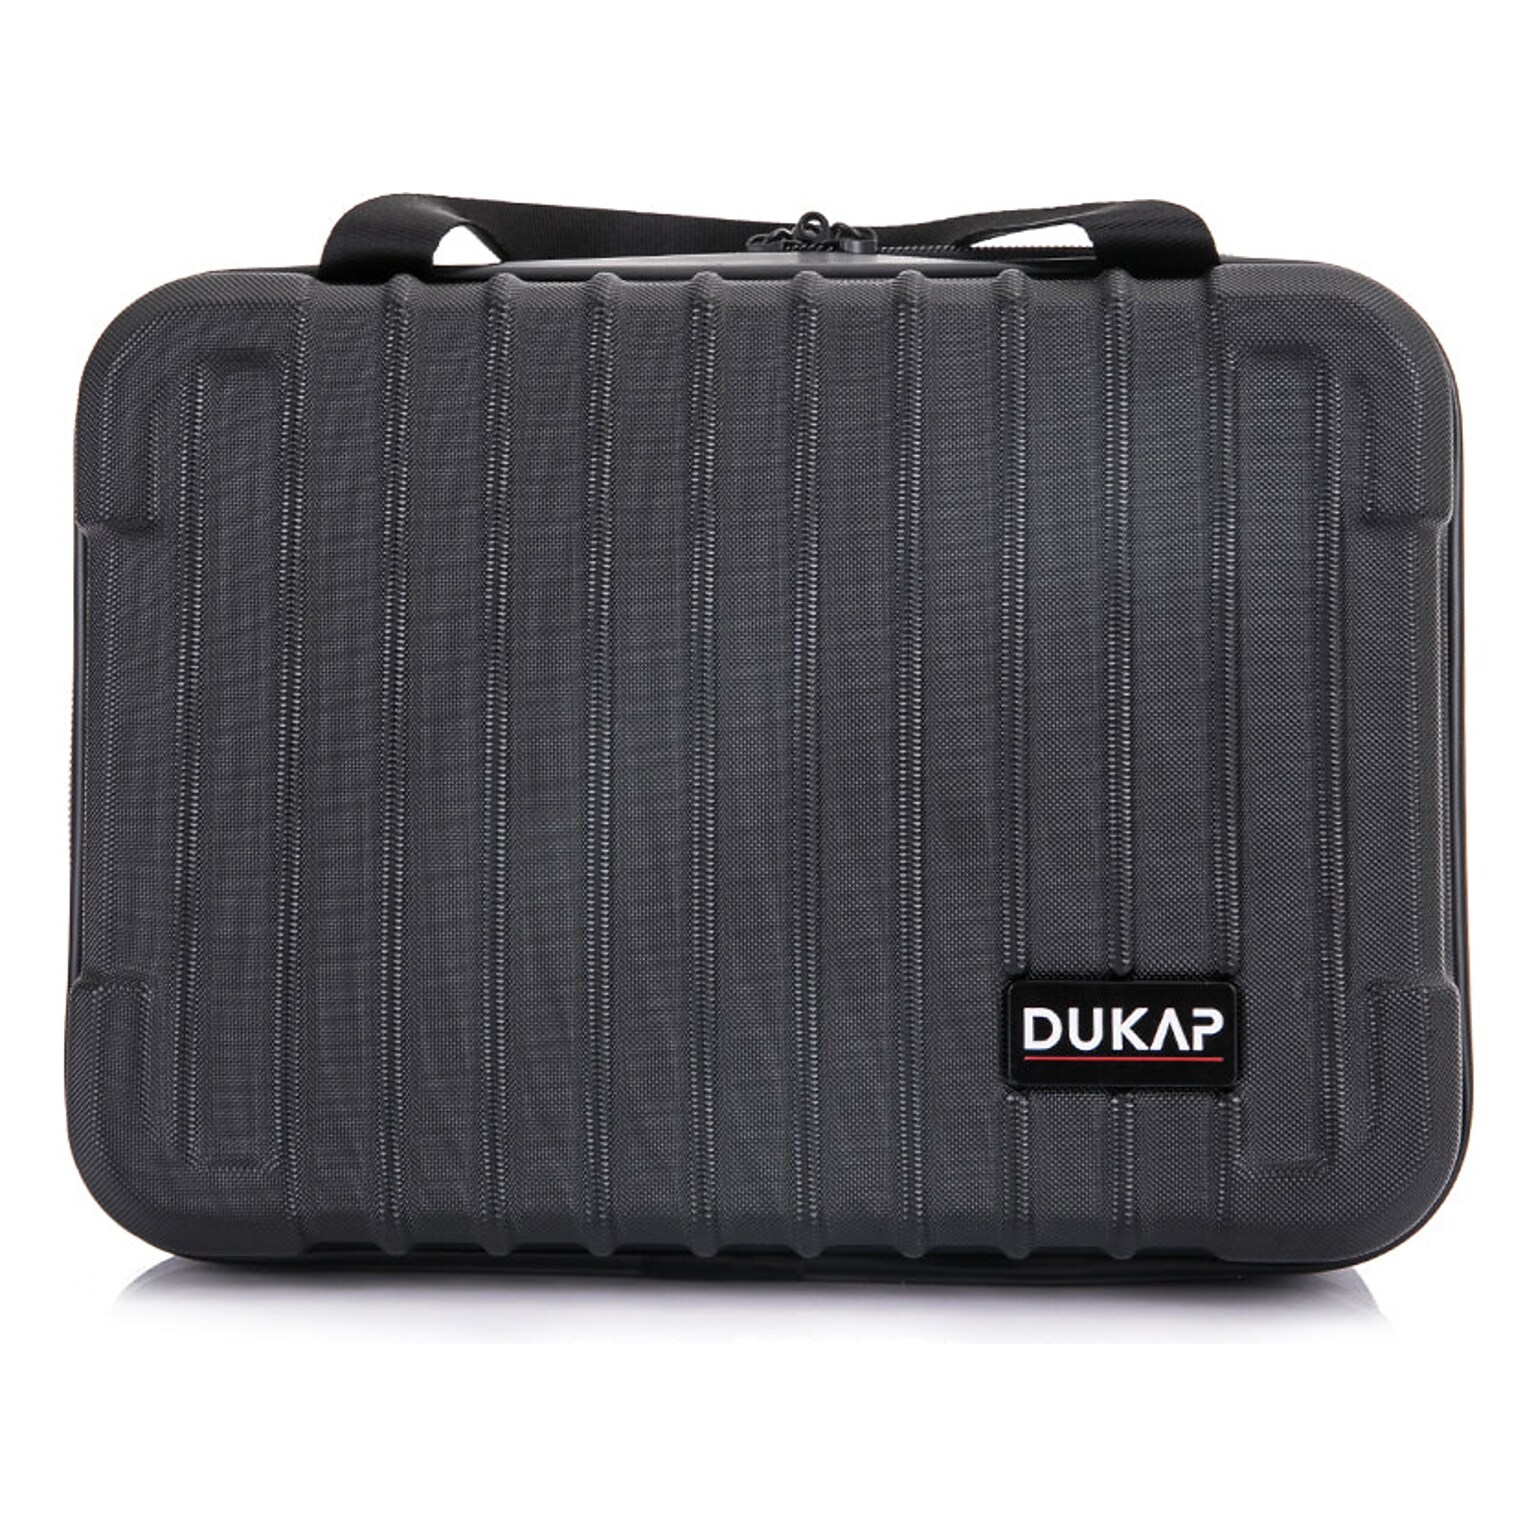 DUKAP Tour 11.5 Plastic Toiletry Bag, Water Resistant, Black (DKTOU00XS-BLK)